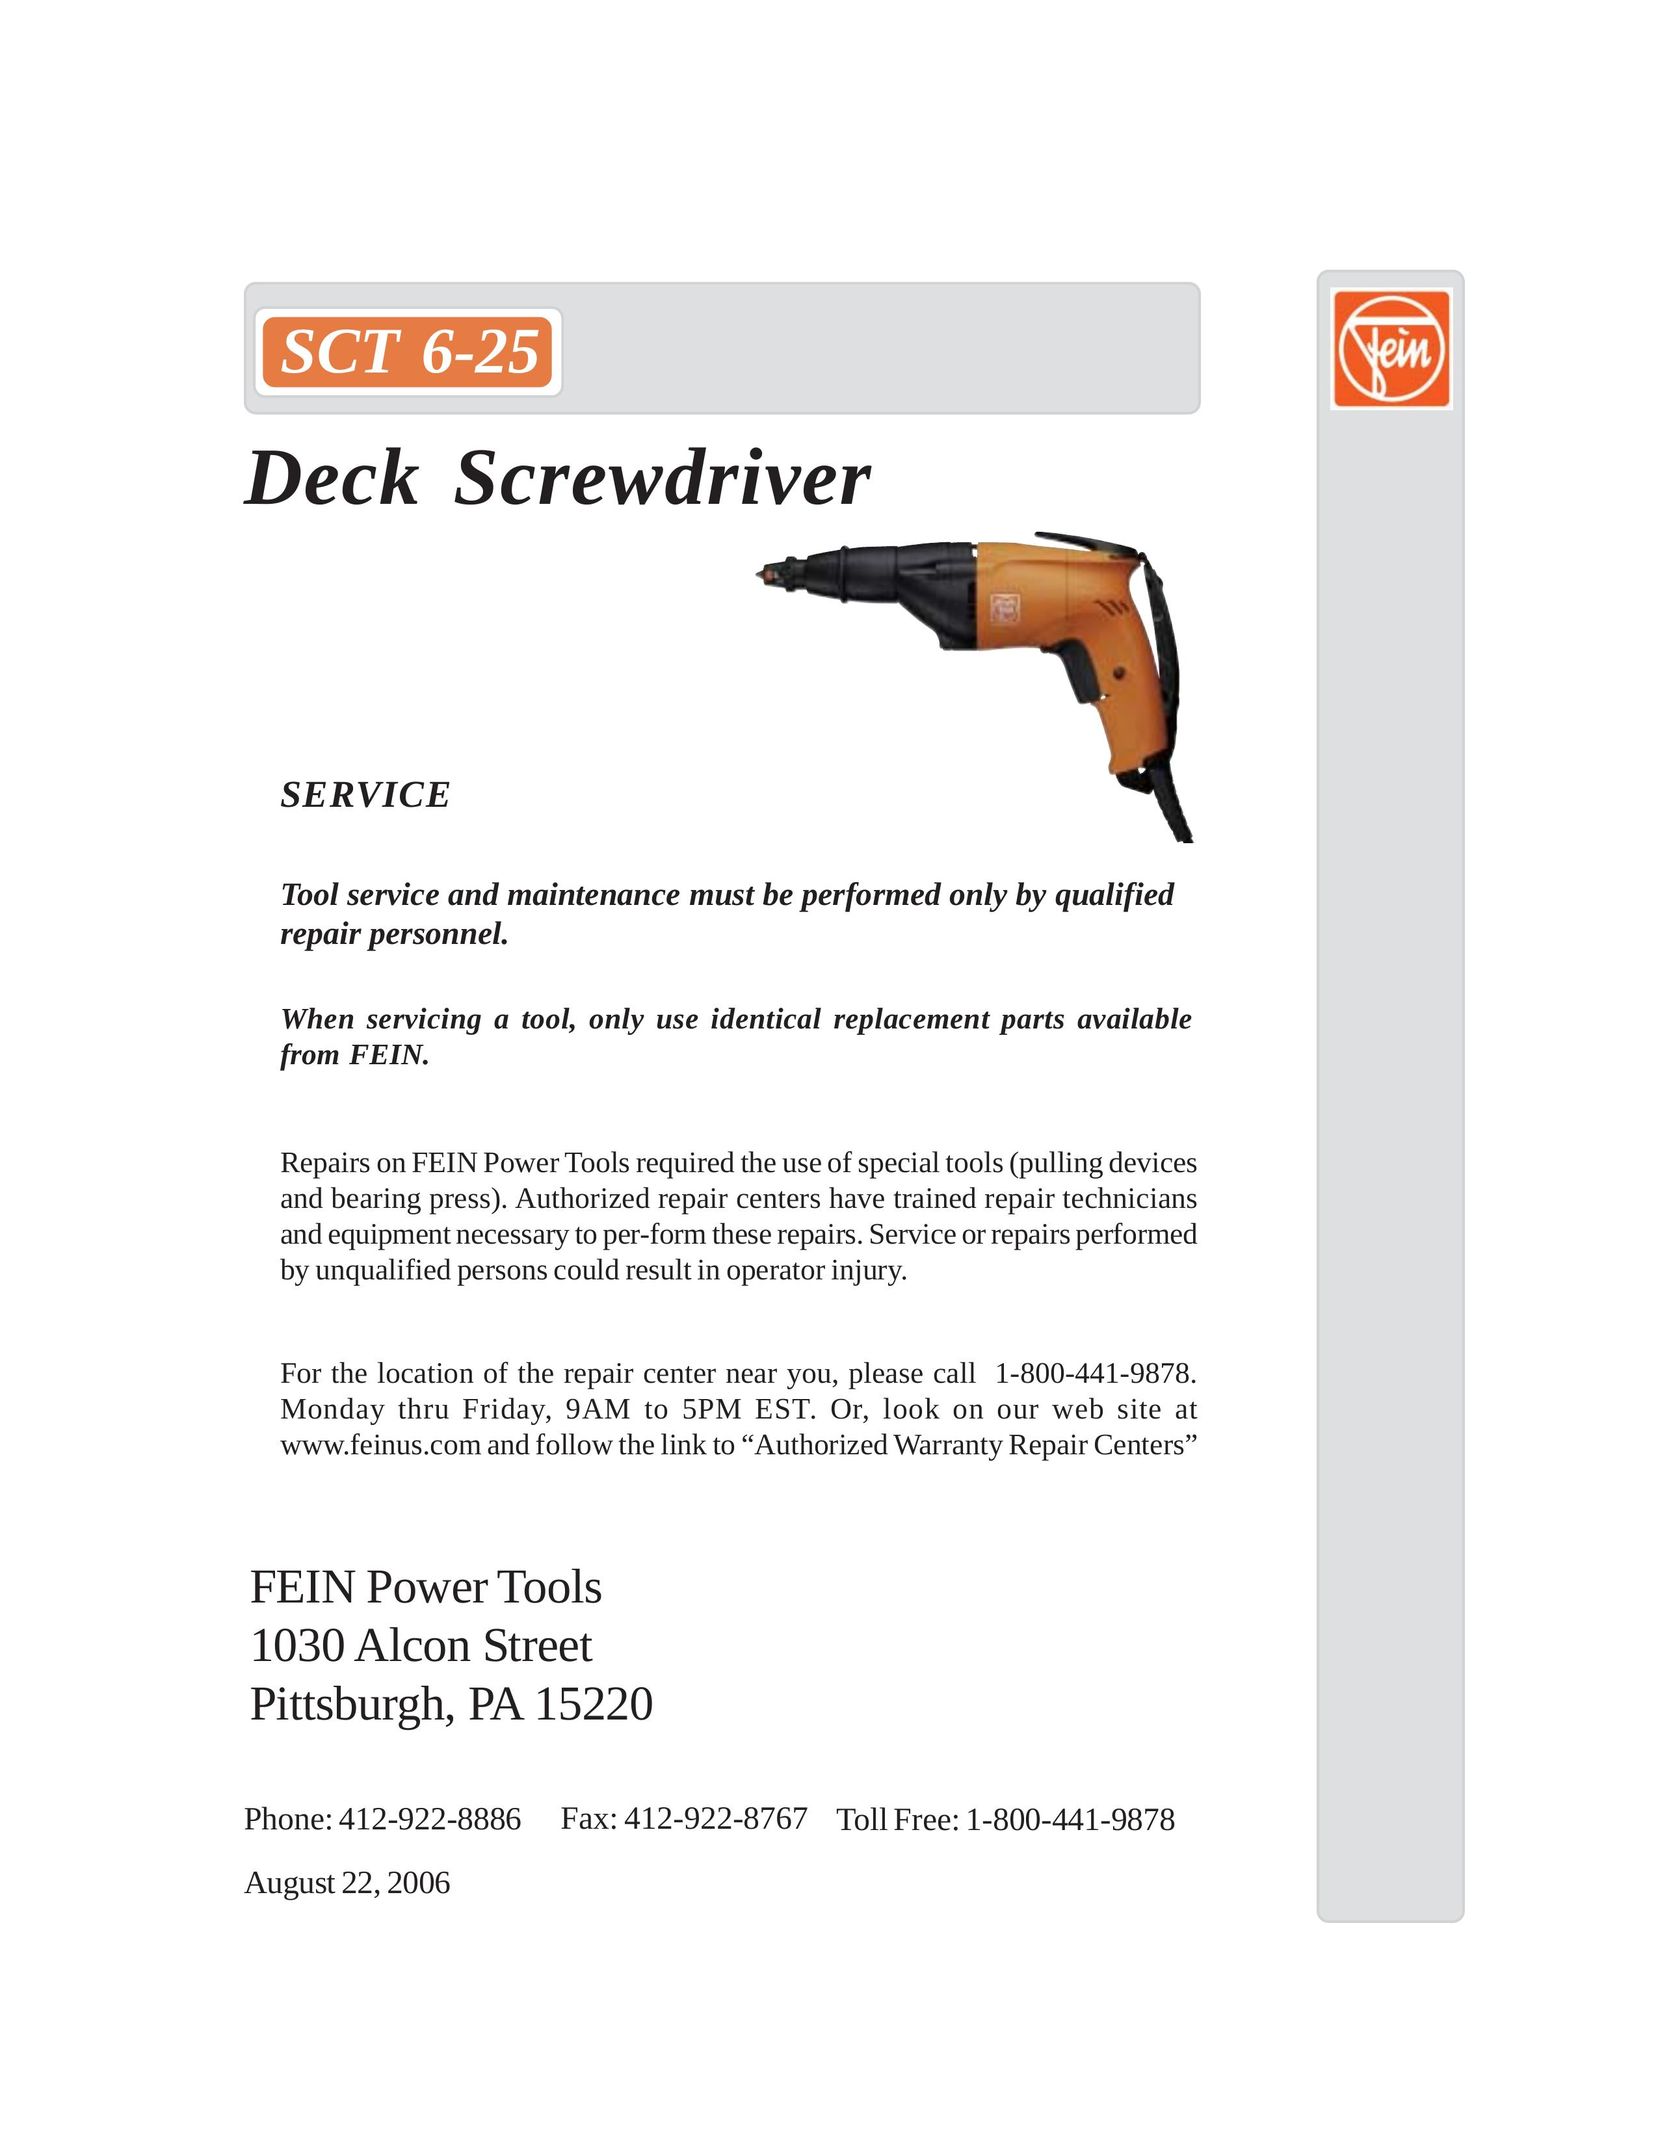 FEIN Power Tools SCT 6-25 Power Screwdriver User Manual